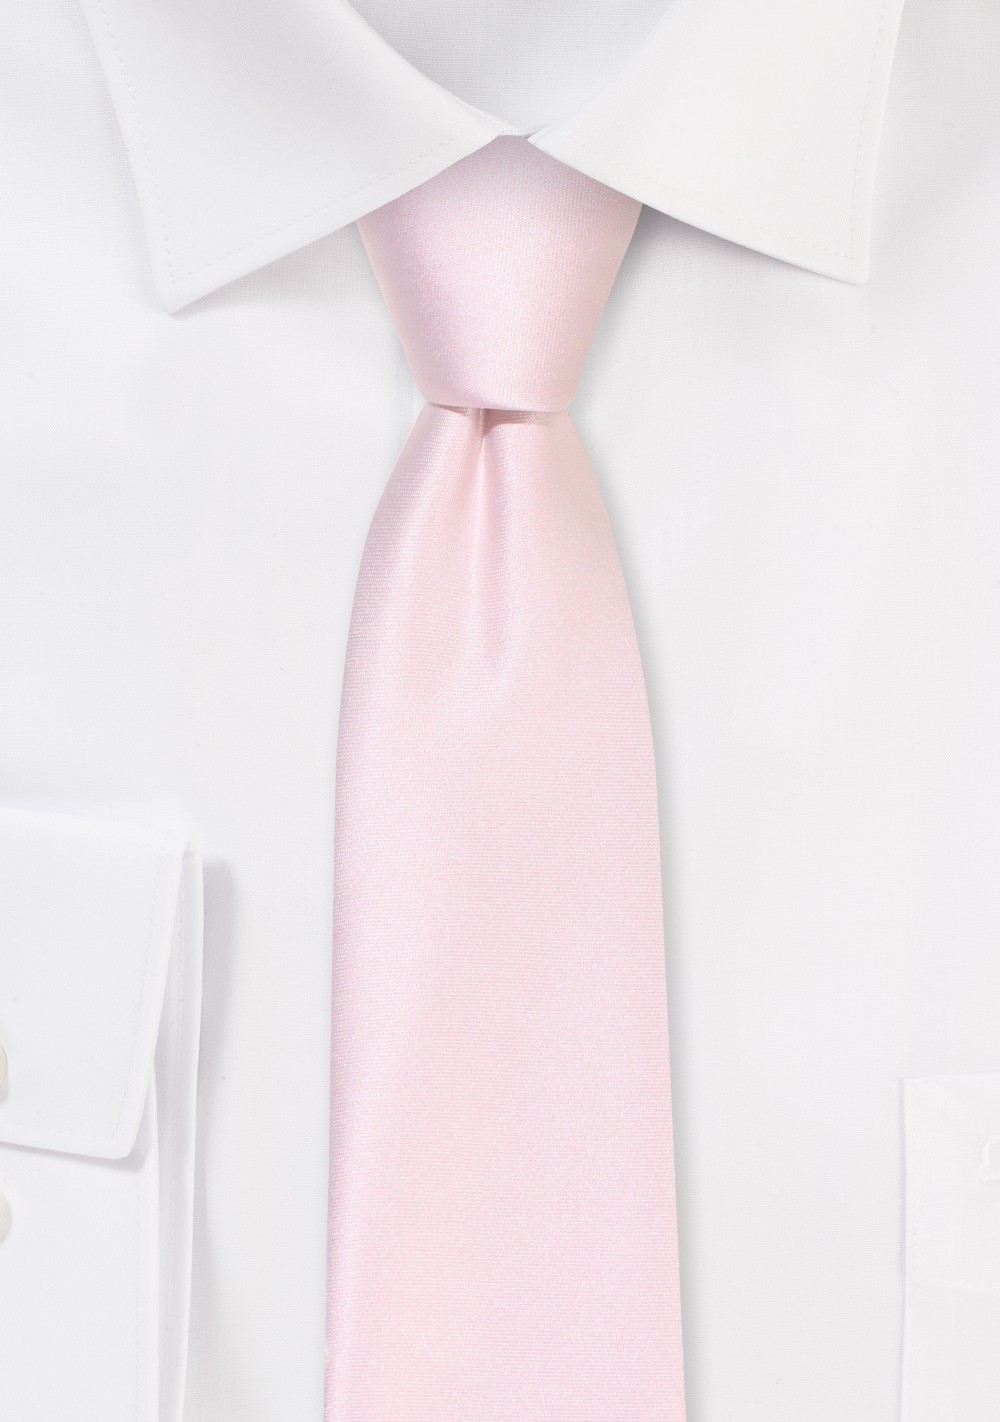 Solid Satin Skinny Tie in Blush Pink